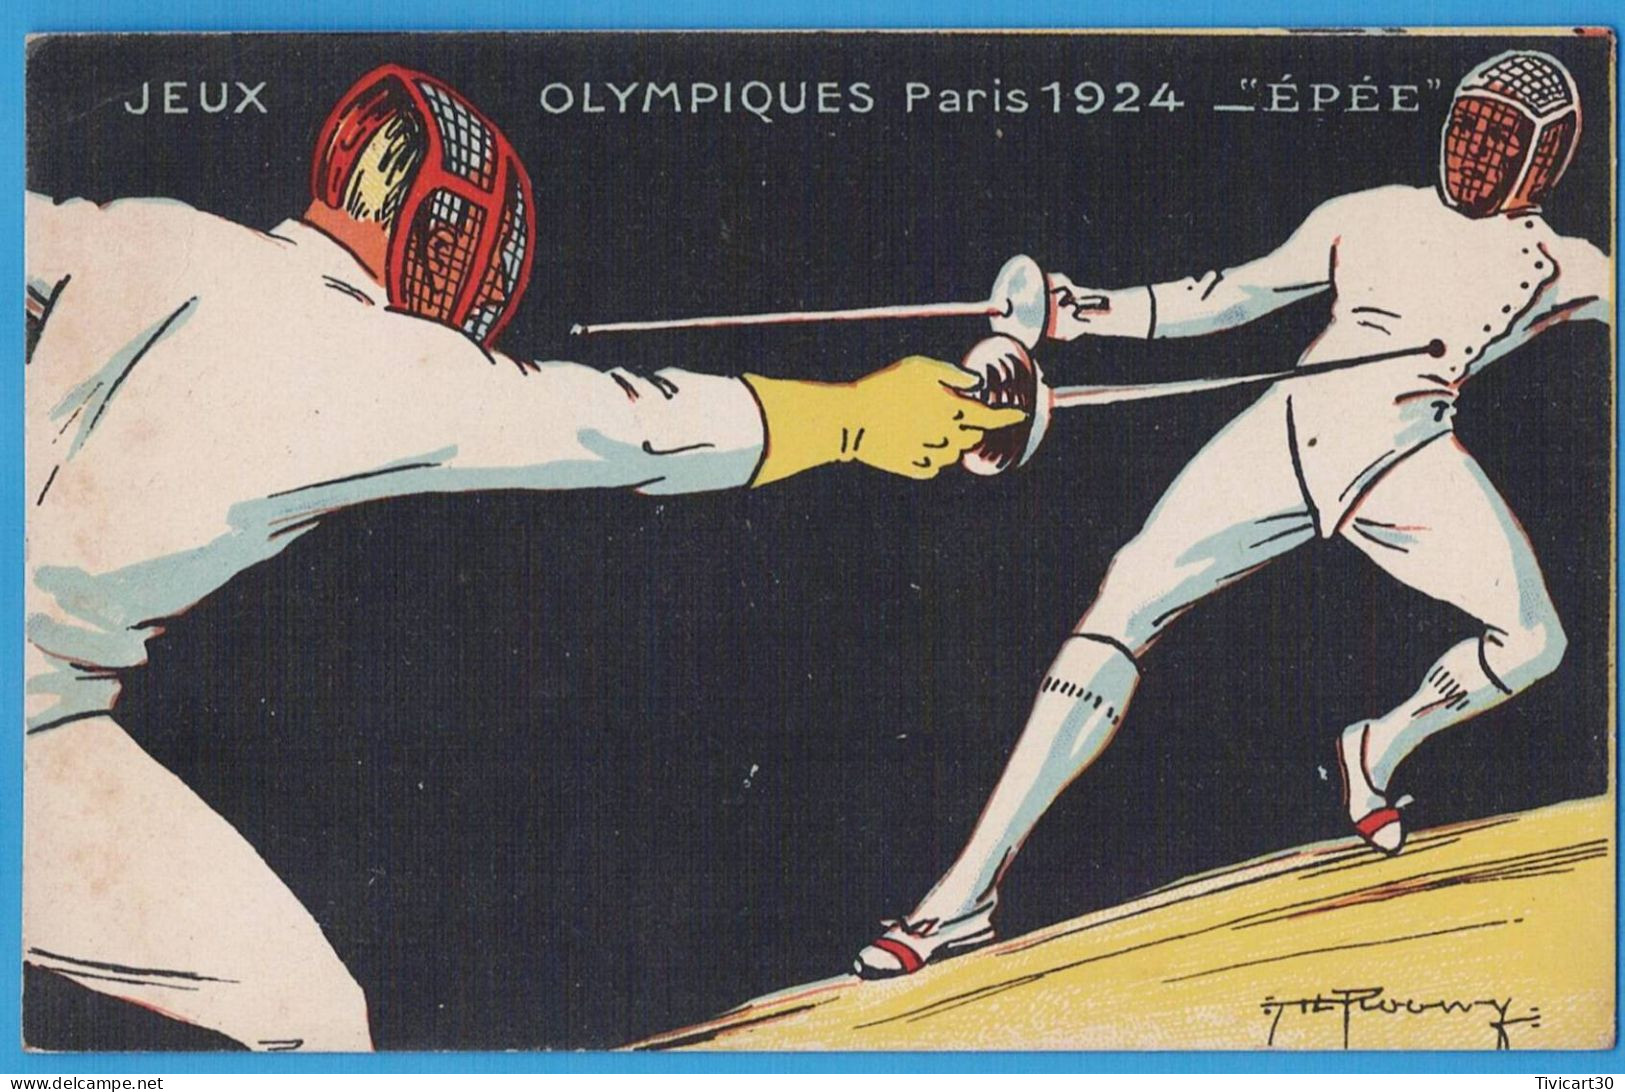 CPA JEUX OLYMPIQUES PARIS 1924 - EPEE - ILLUSTRATEUR ROOWEY - COLLECTION KOLARSINE ET SOLUTION PAUTAUBERGE - Olympic Games